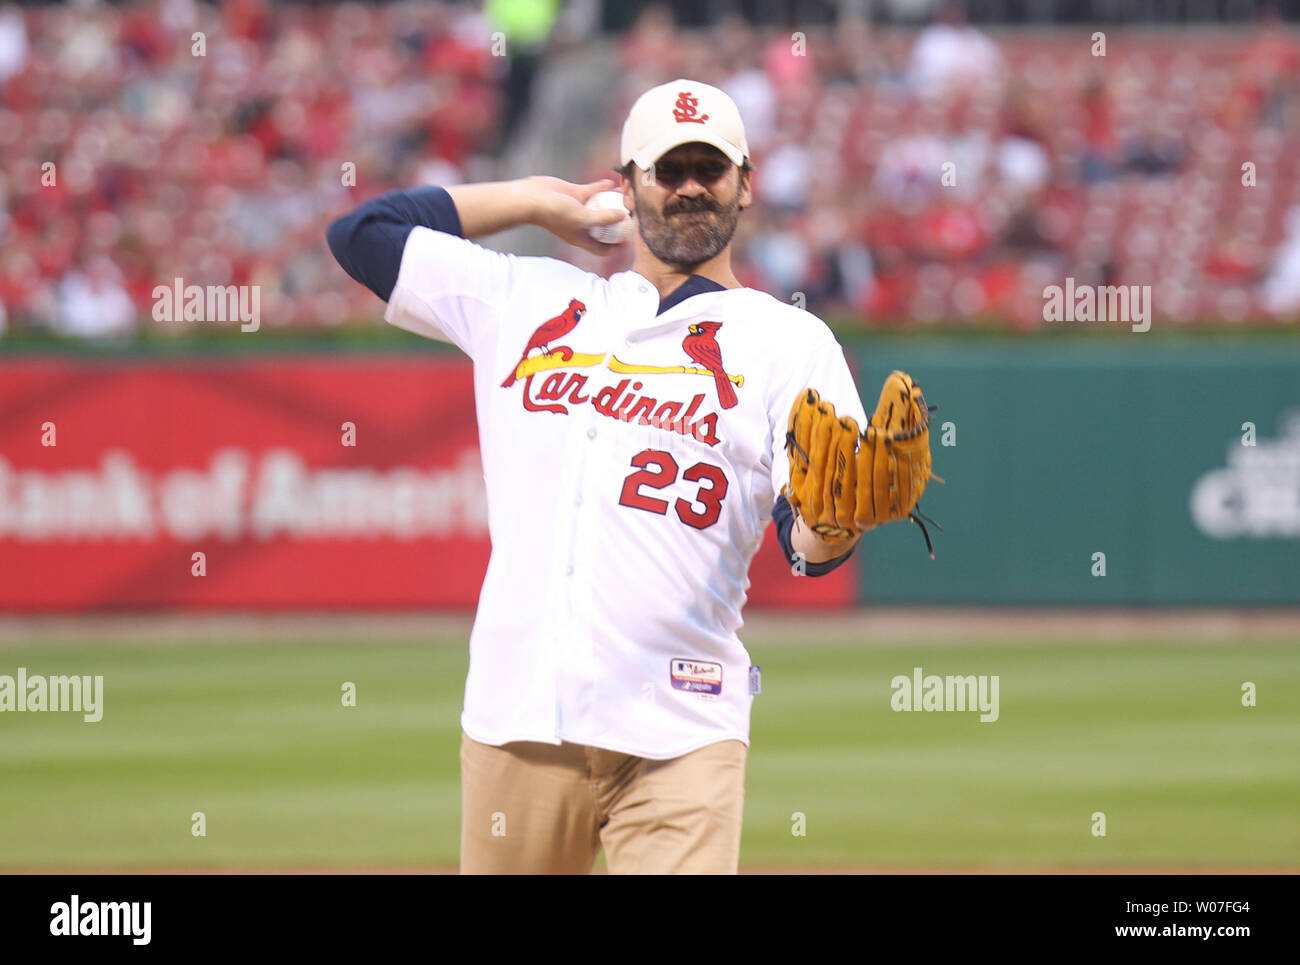 Native St. Louisian and avid Cardinals fan, actor Jon Hamm throws a ceremonial first pitch before the Cincinnati Reds-St